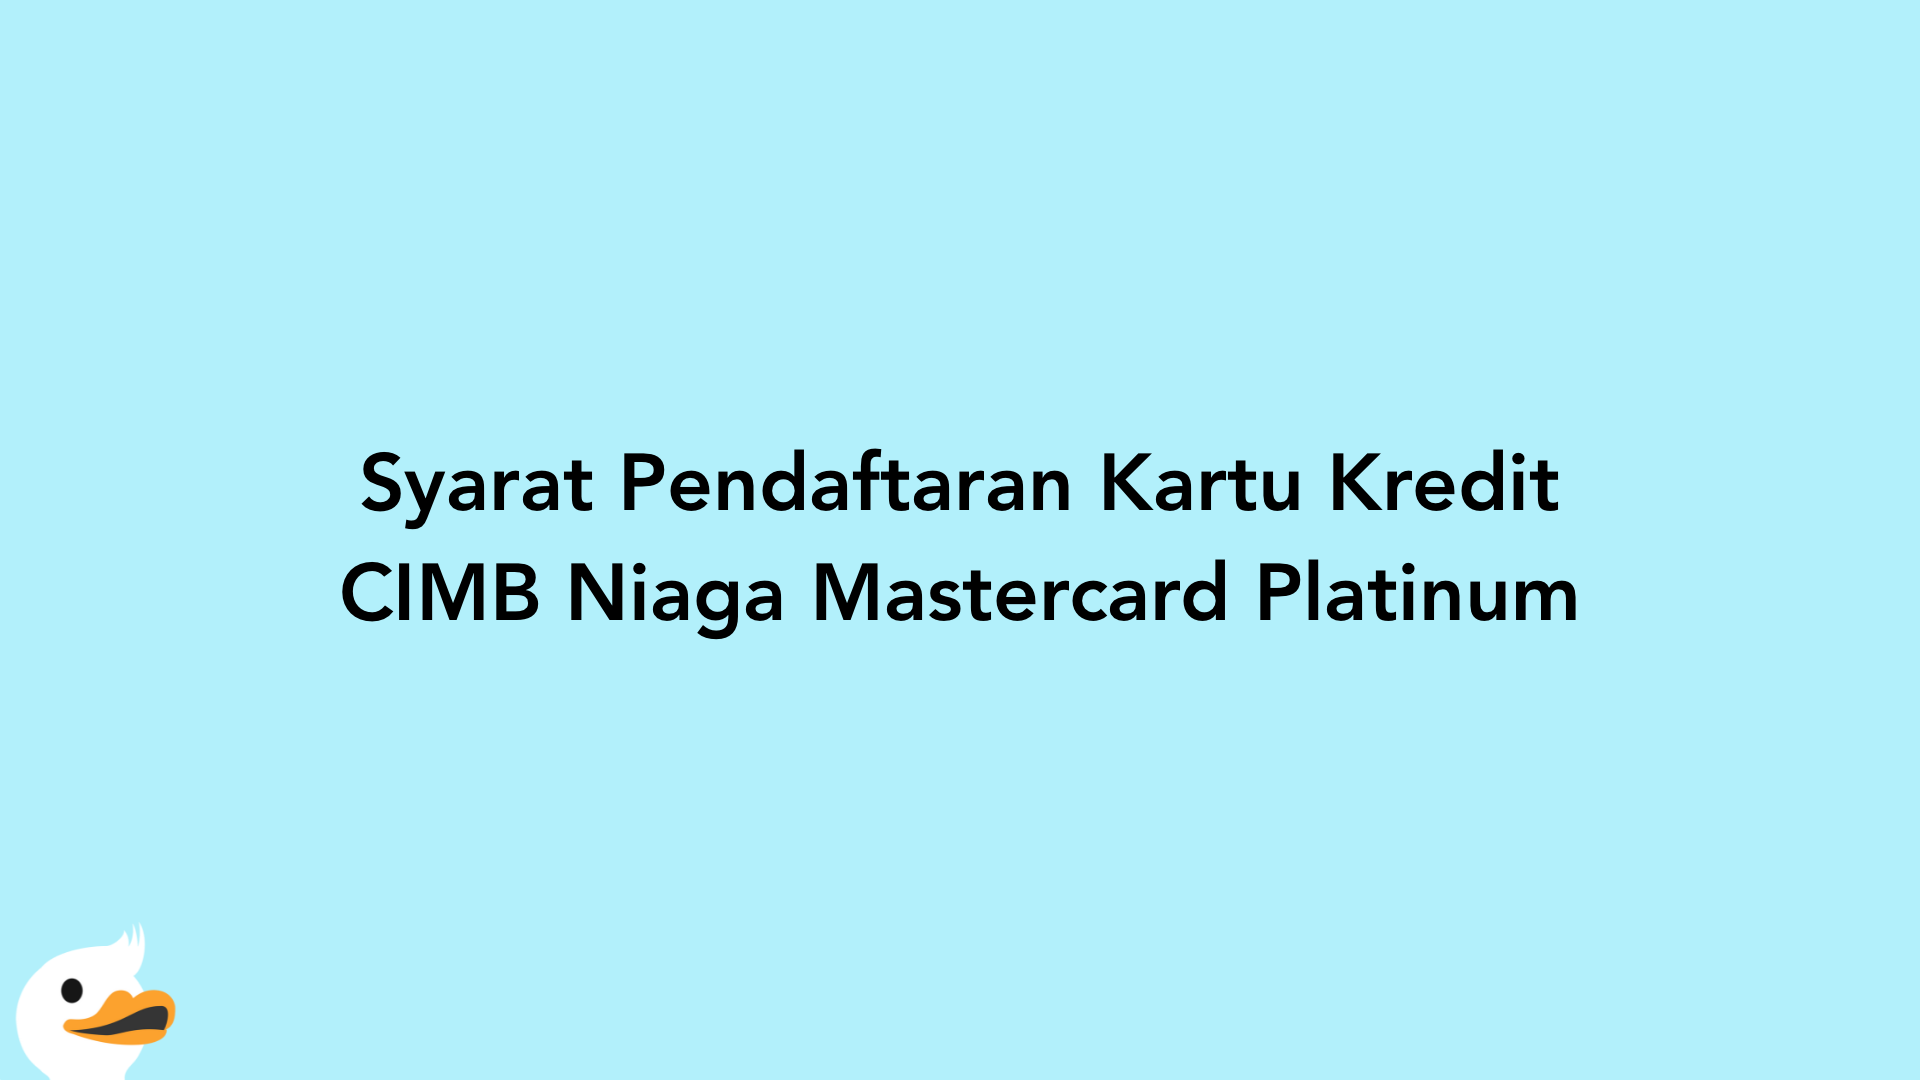 Syarat Pendaftaran Kartu Kredit CIMB Niaga Mastercard Platinum